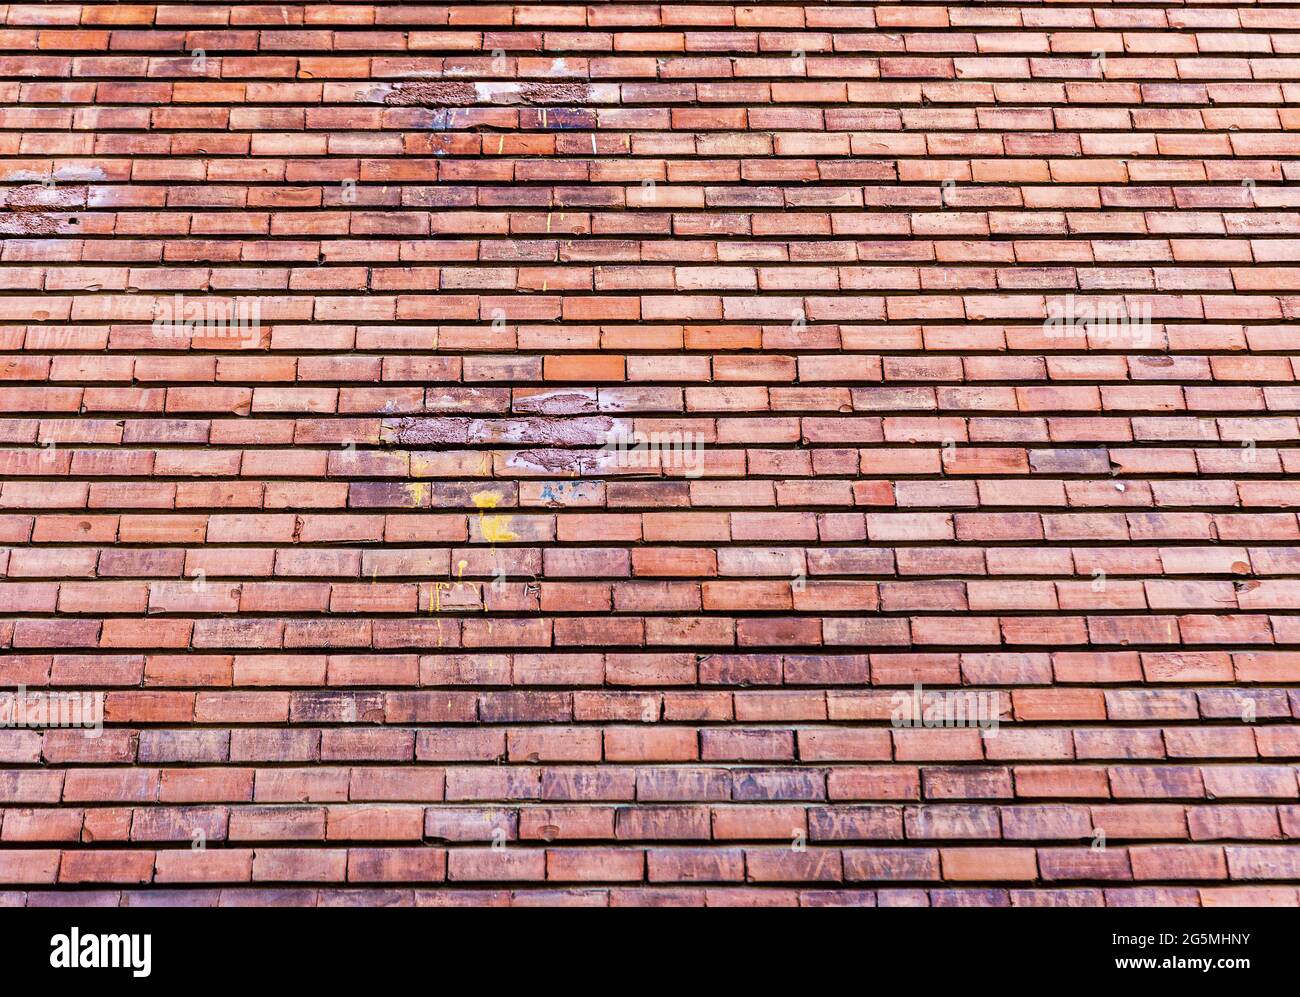 Brick texture. Brick wall. A small brick. The texture of the brick wall Stock Photo